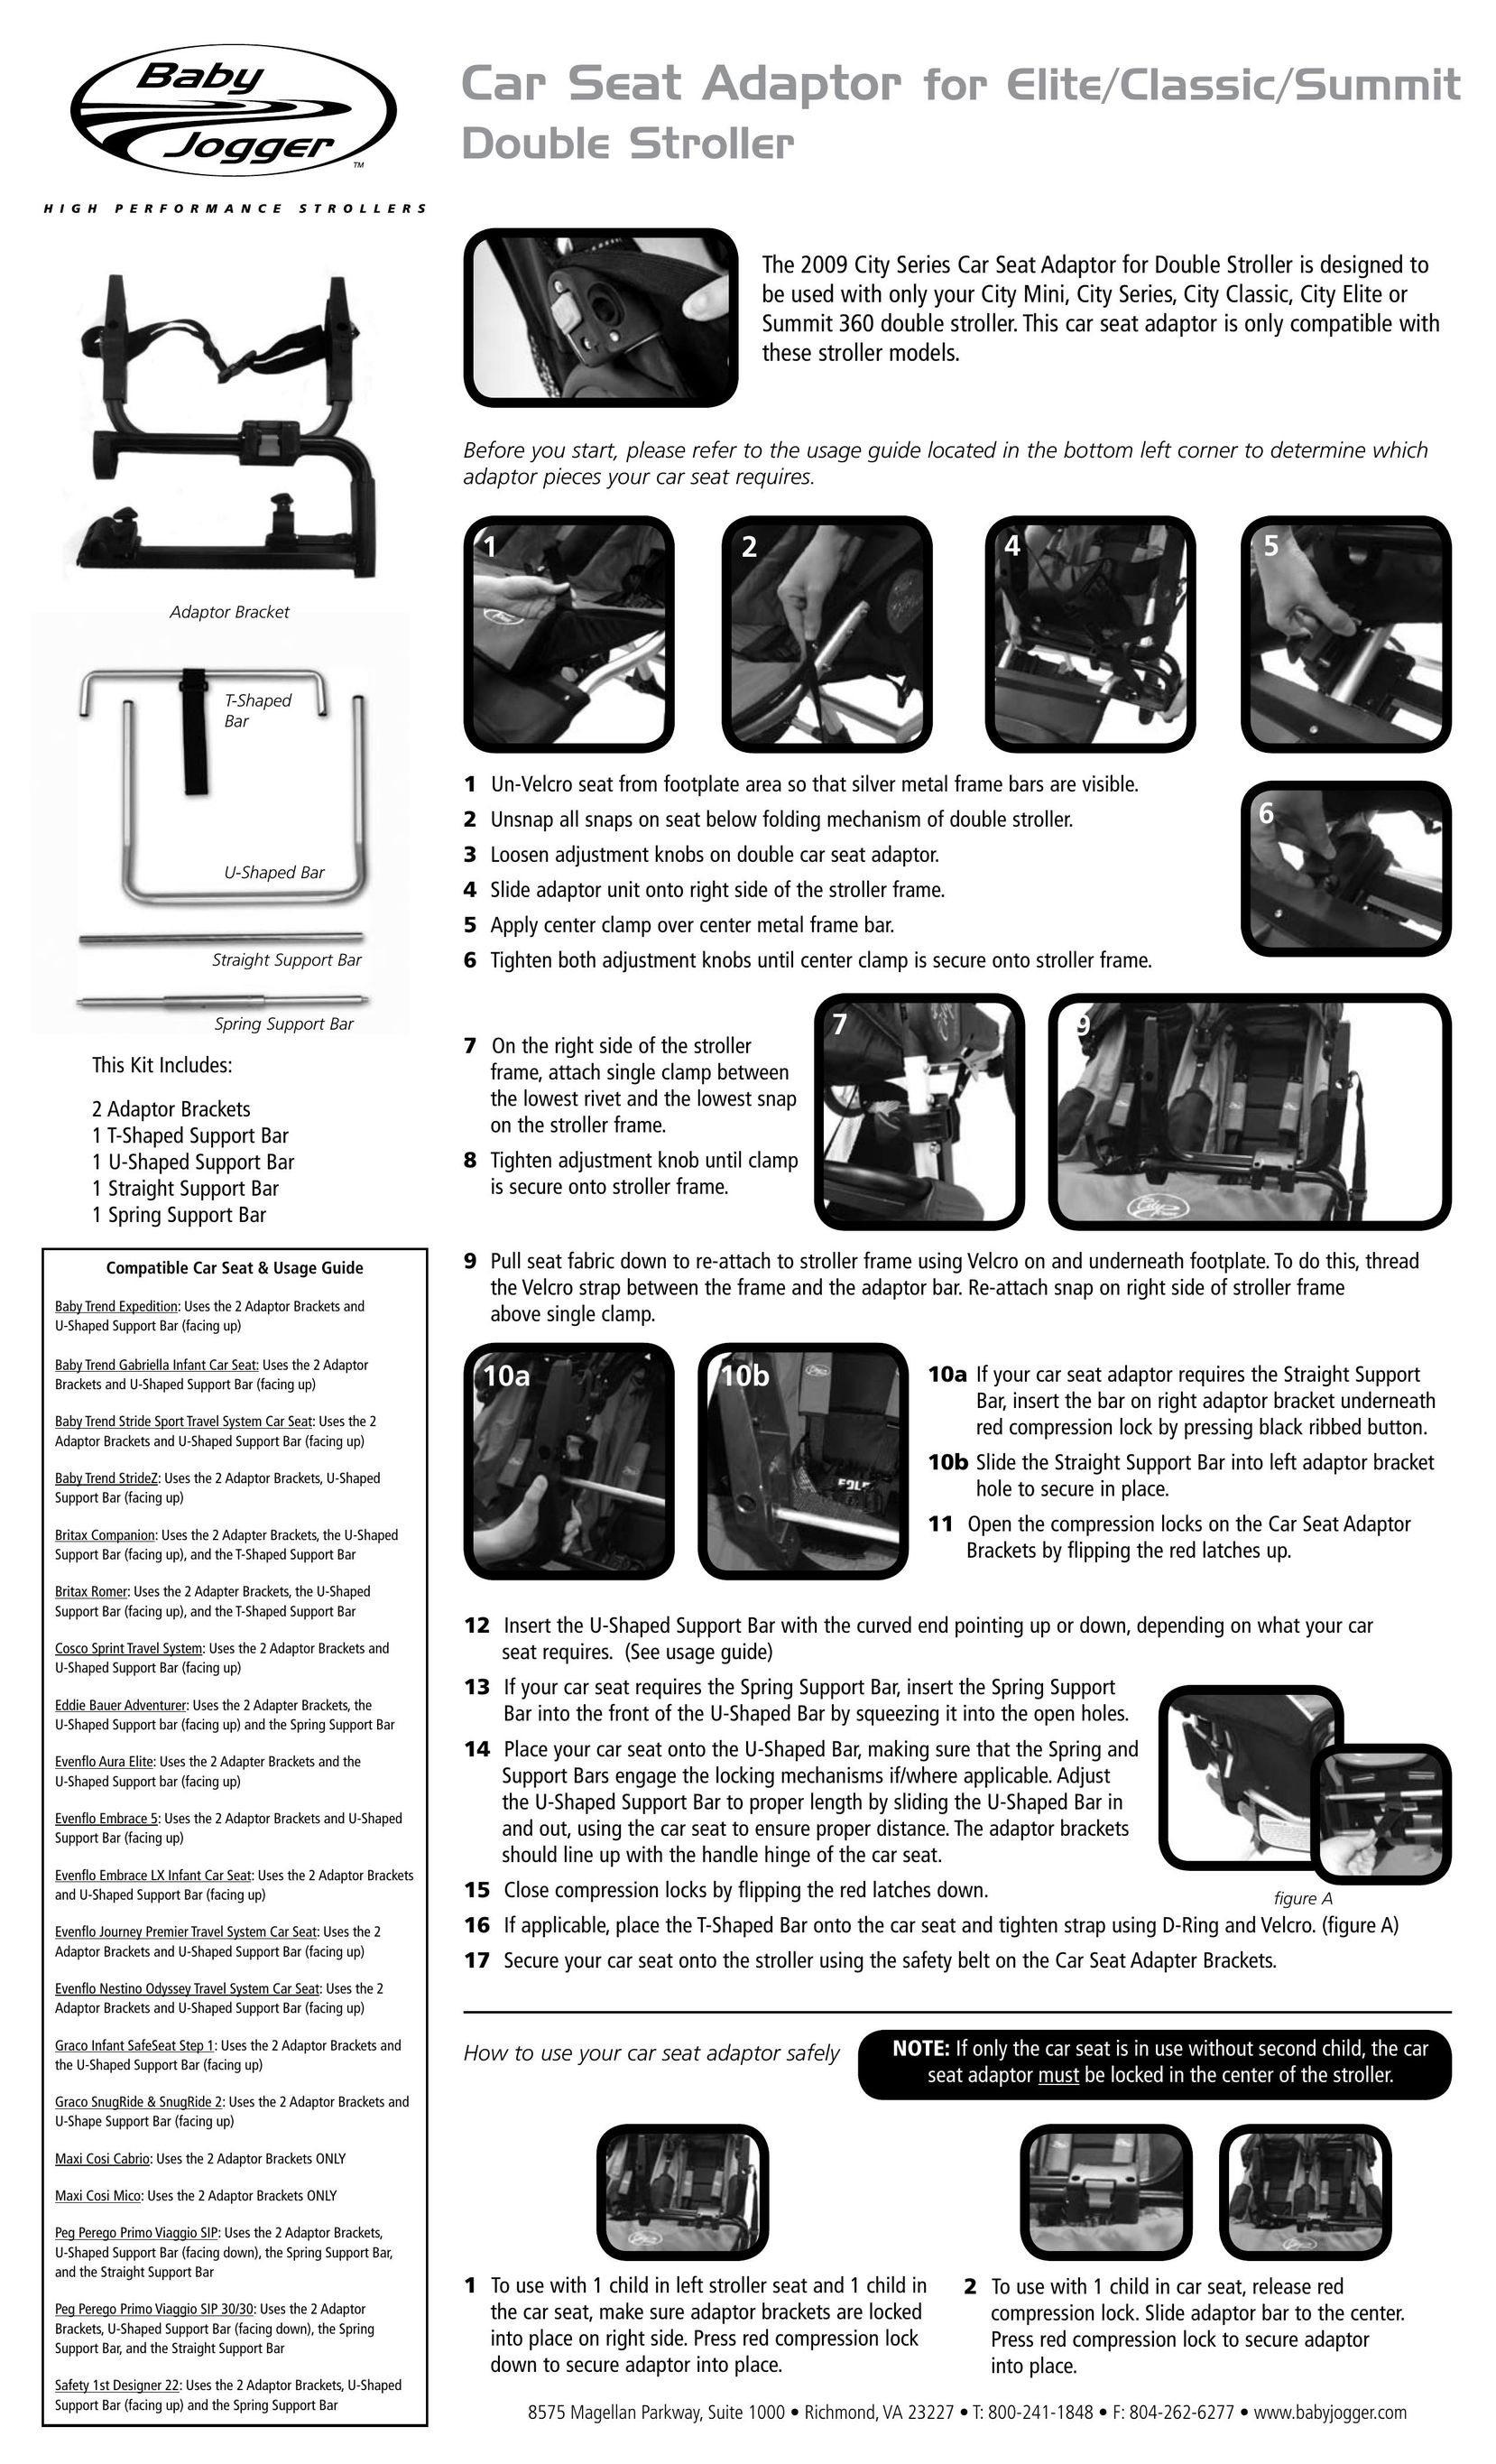 Baby Jogger Car Seat Car Seat User Manual